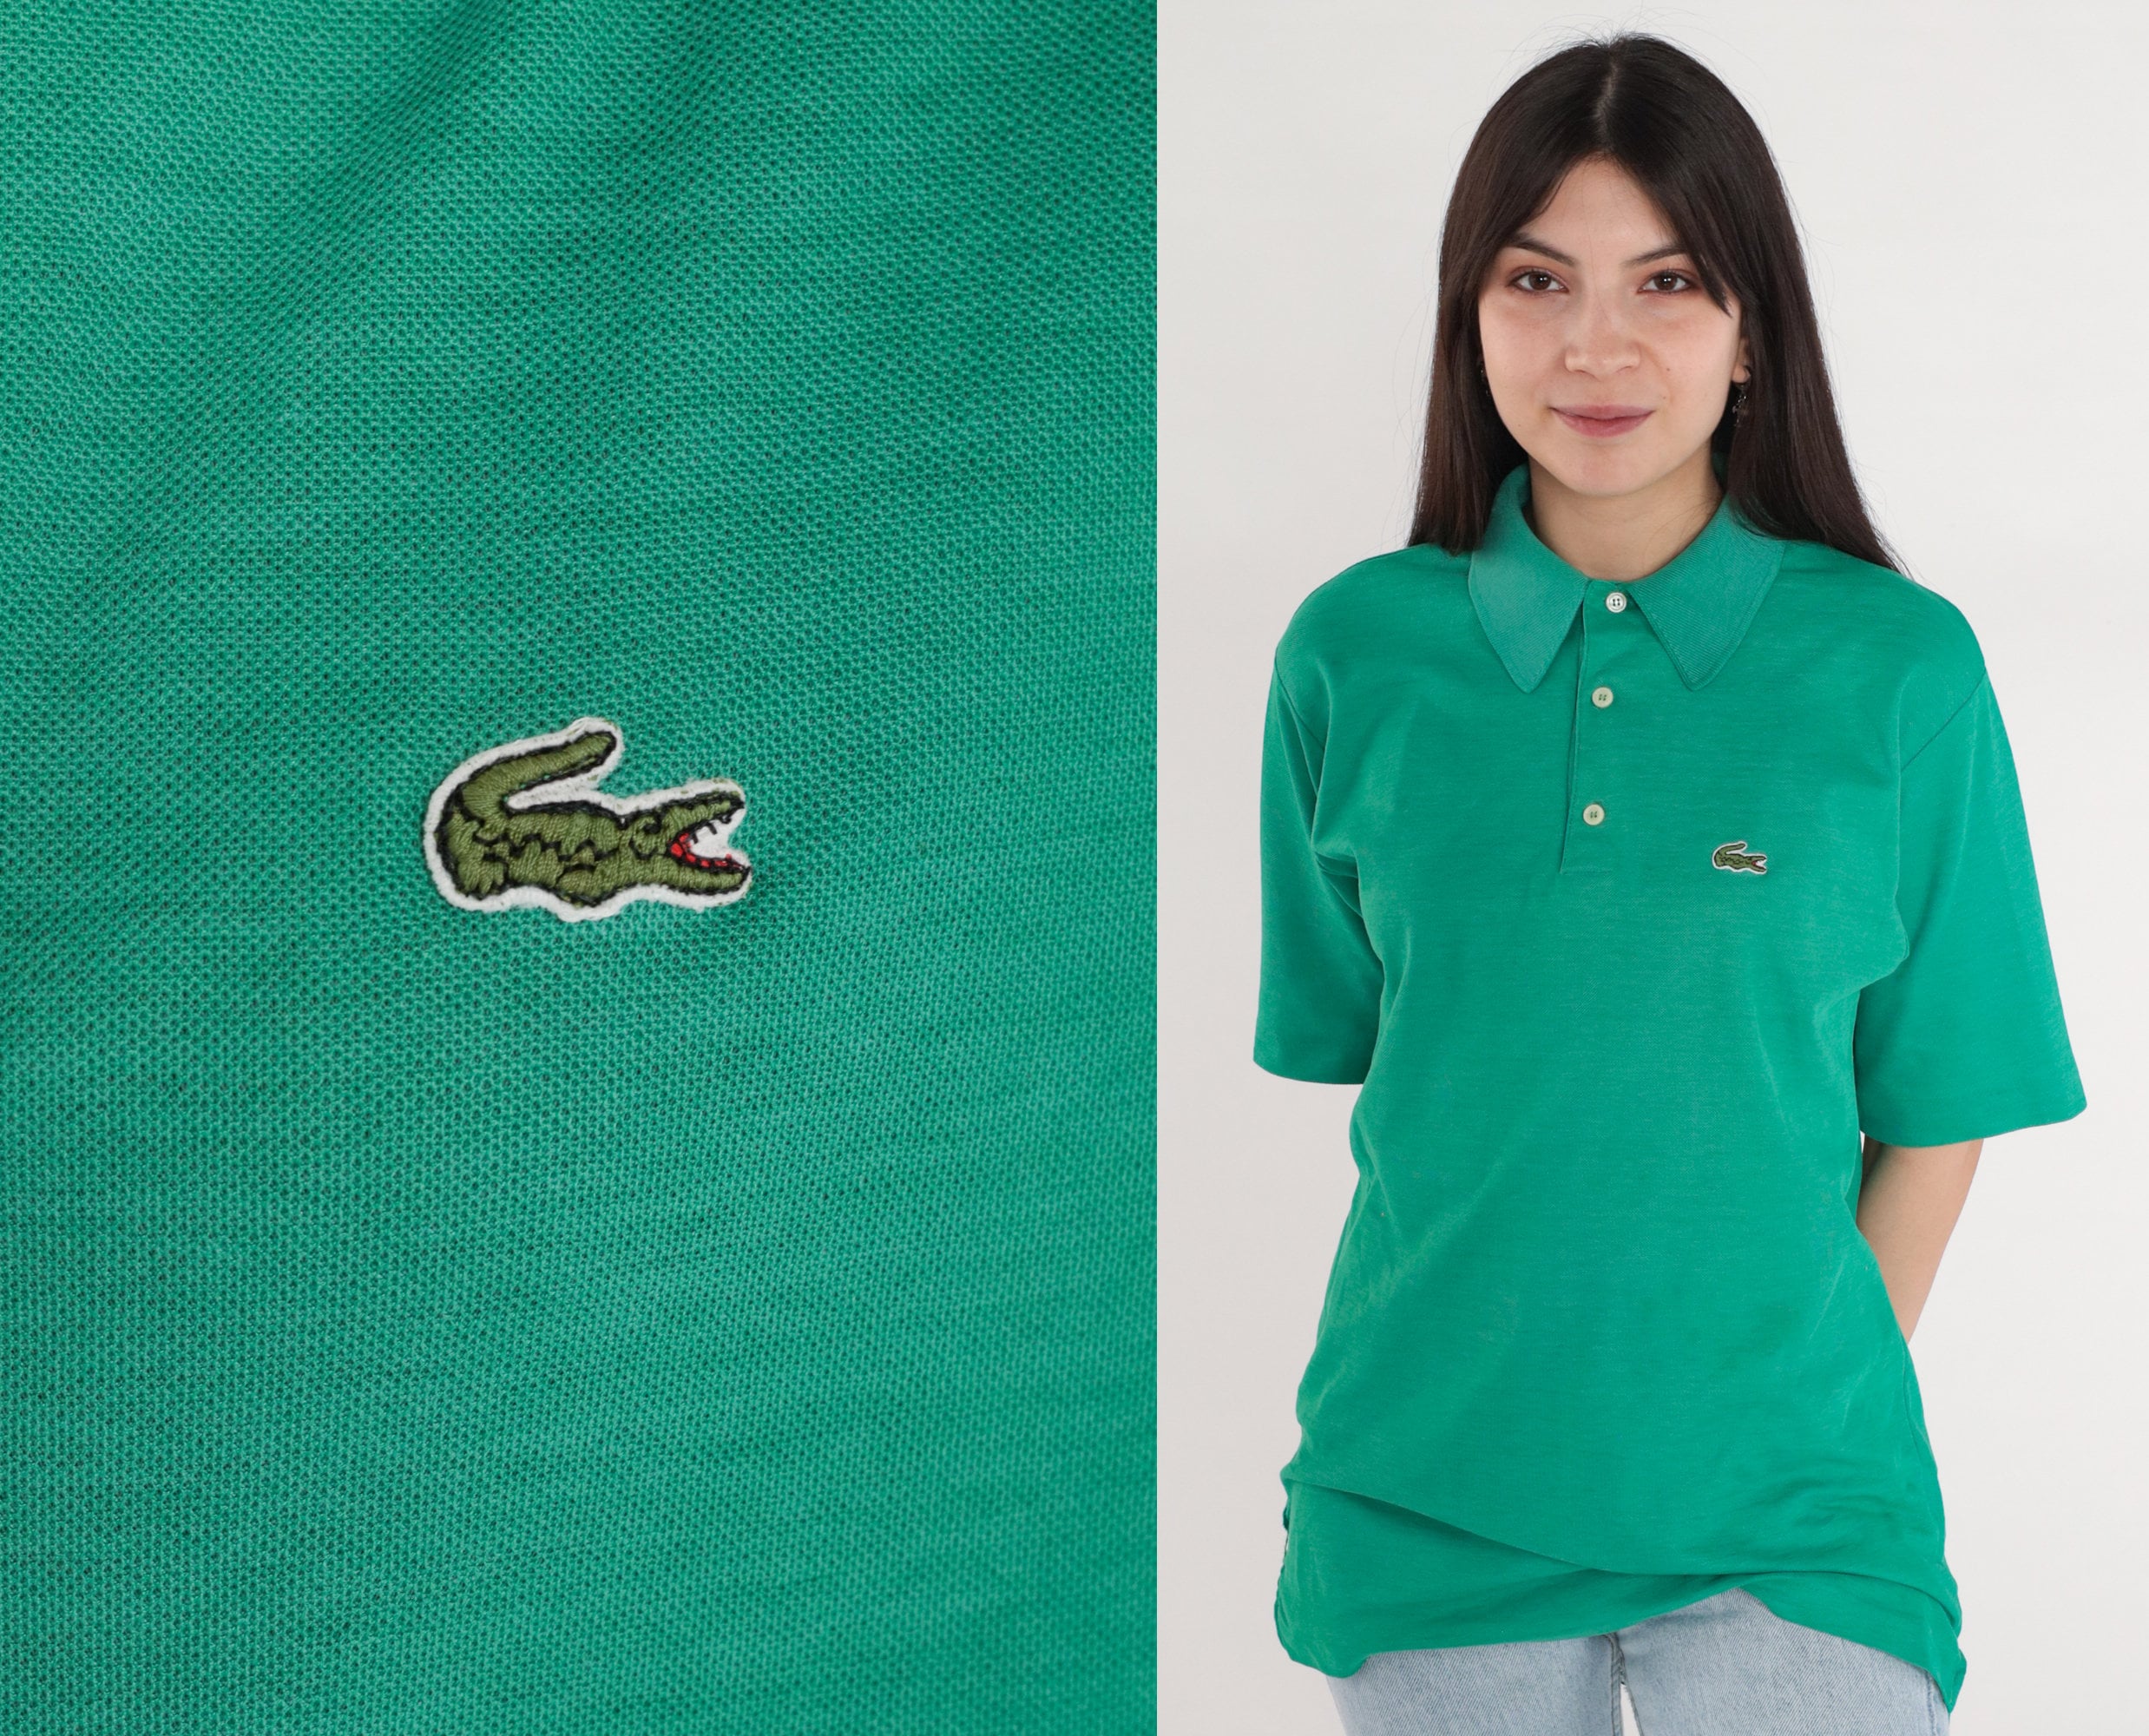 Lacoste Polo Shirt 80s Green Shirt Izod Crocodile T-Shirt Retro Preppy Collar Top Basic Simple Plain Designer Vintage 1980s Medium